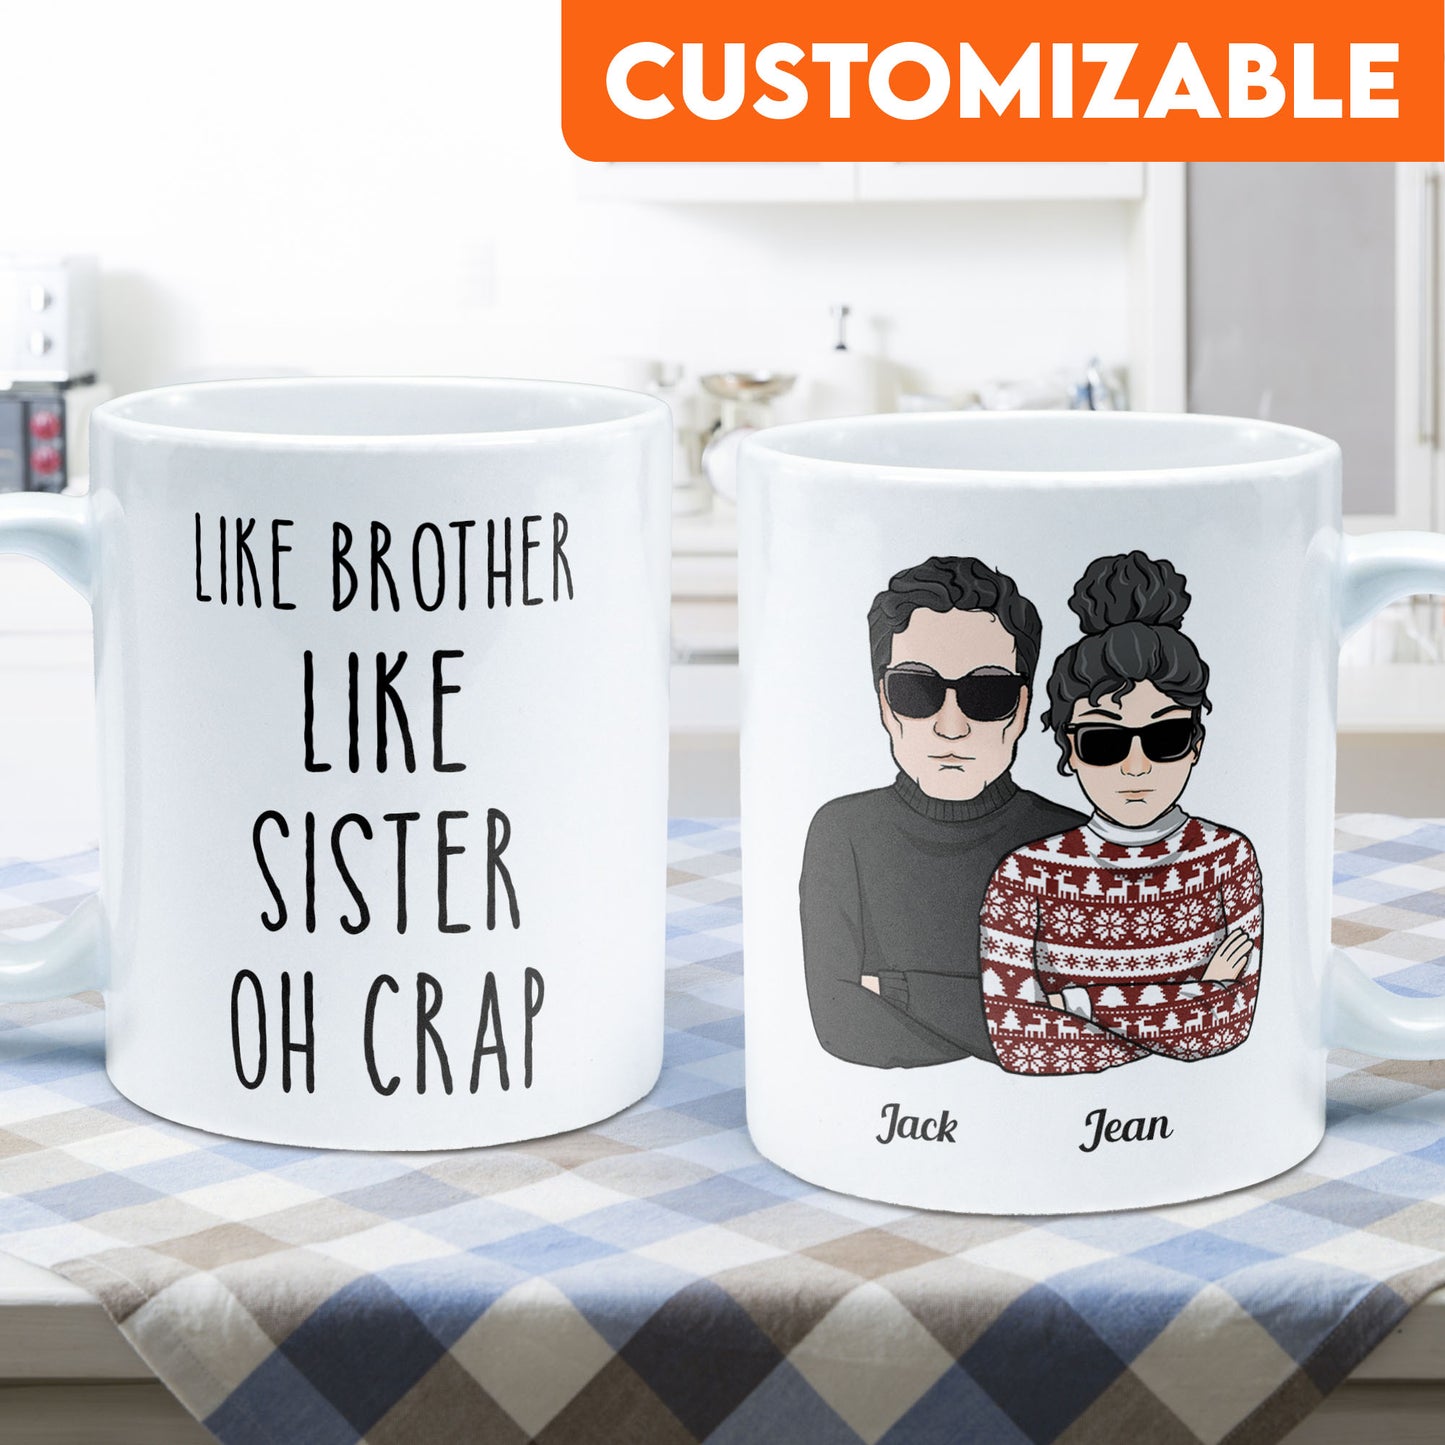 Like Brother Like Sister Oh Crap - Personalized Mug